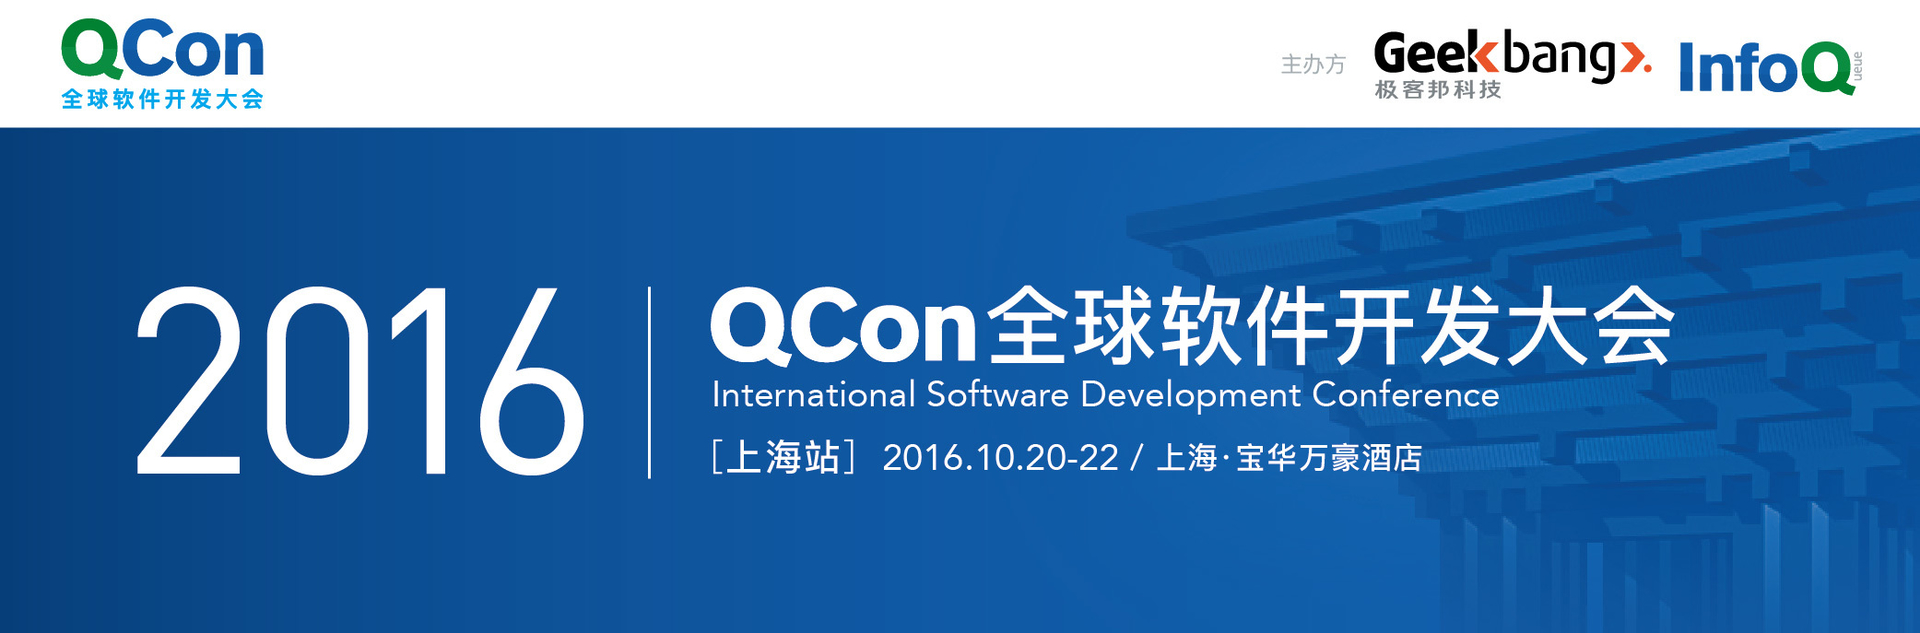 QCon全球软件开发大会【上海站】2016